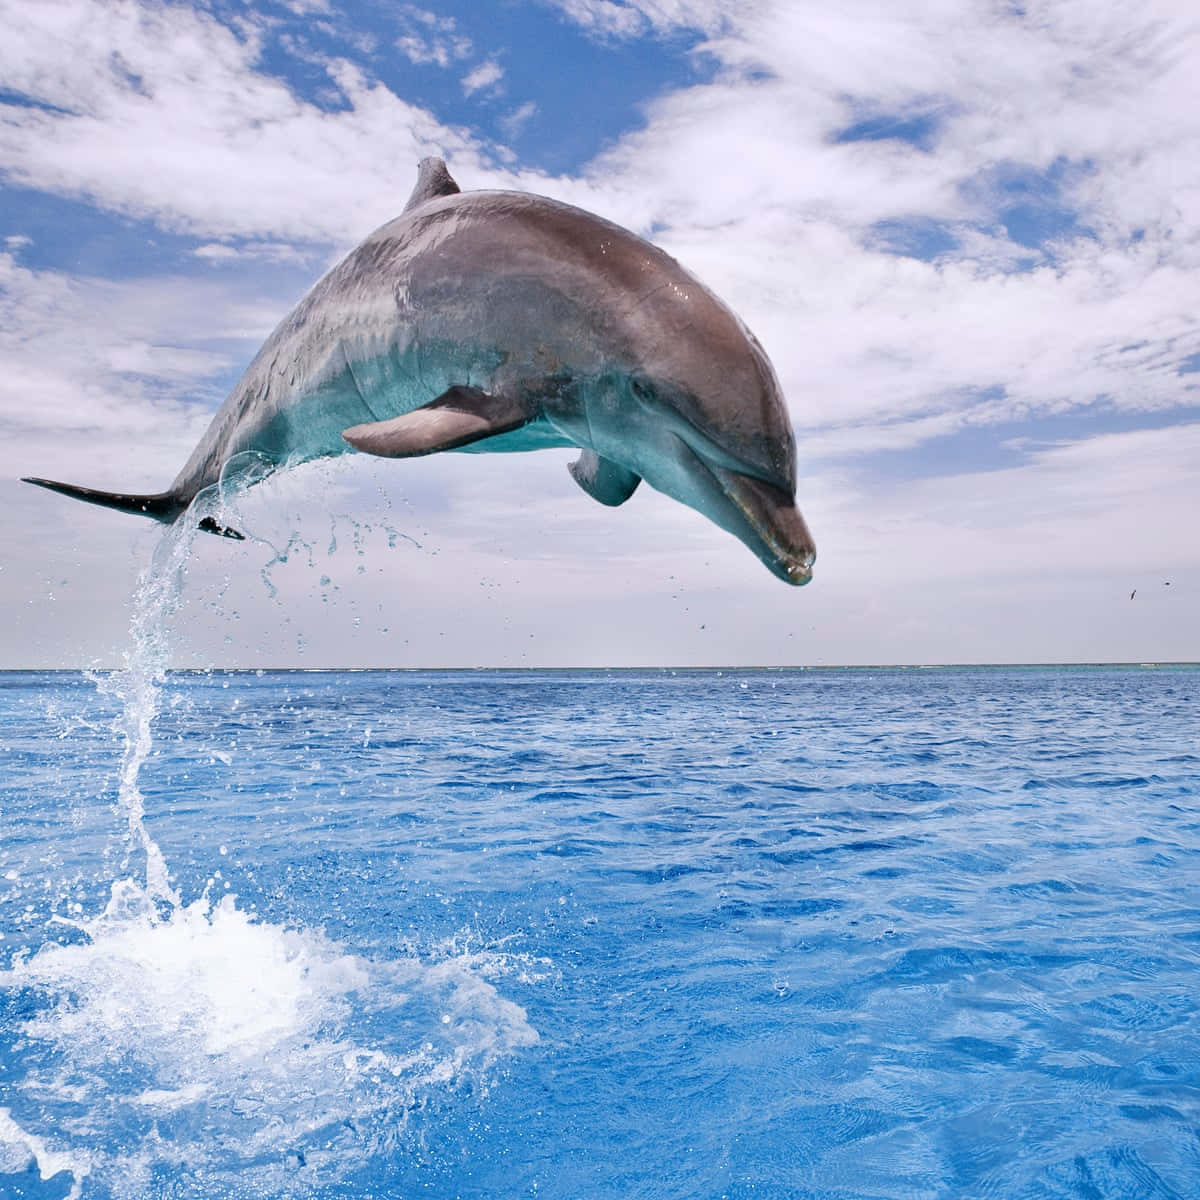 Delphinspringt Aus Dem Wasser.